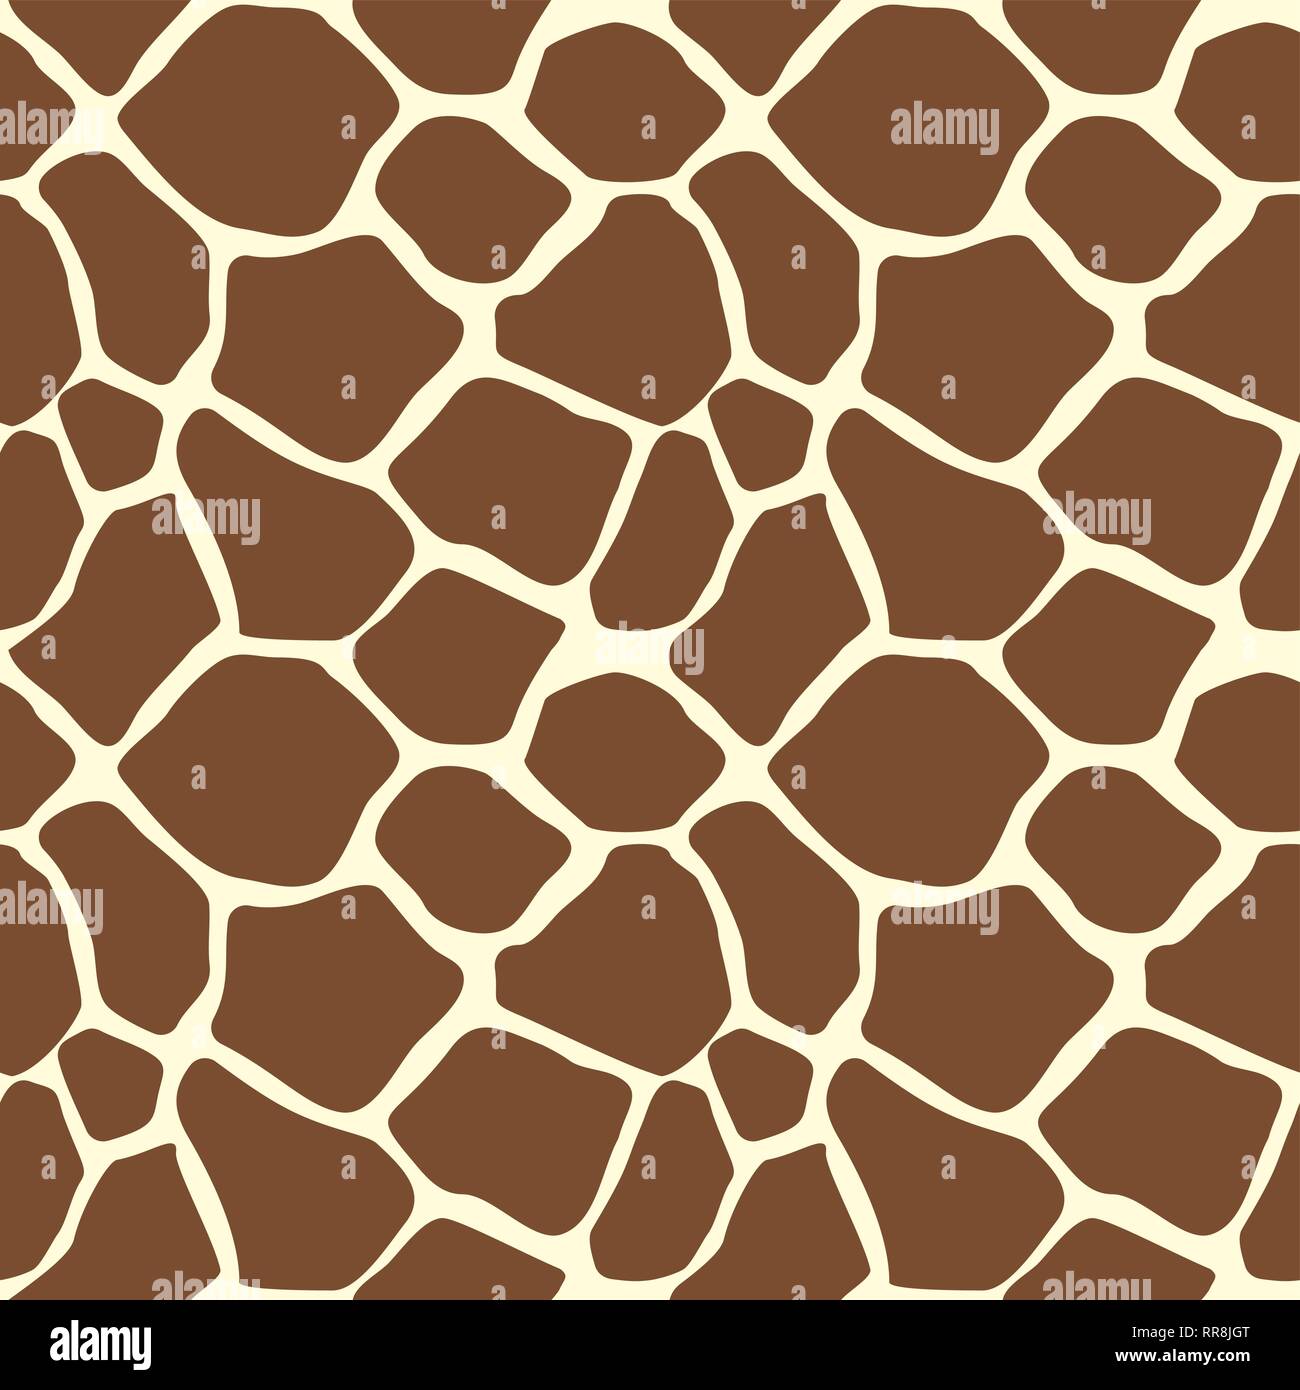 Giraffe Animal Print Pattern Seamless Tile Stock Vector